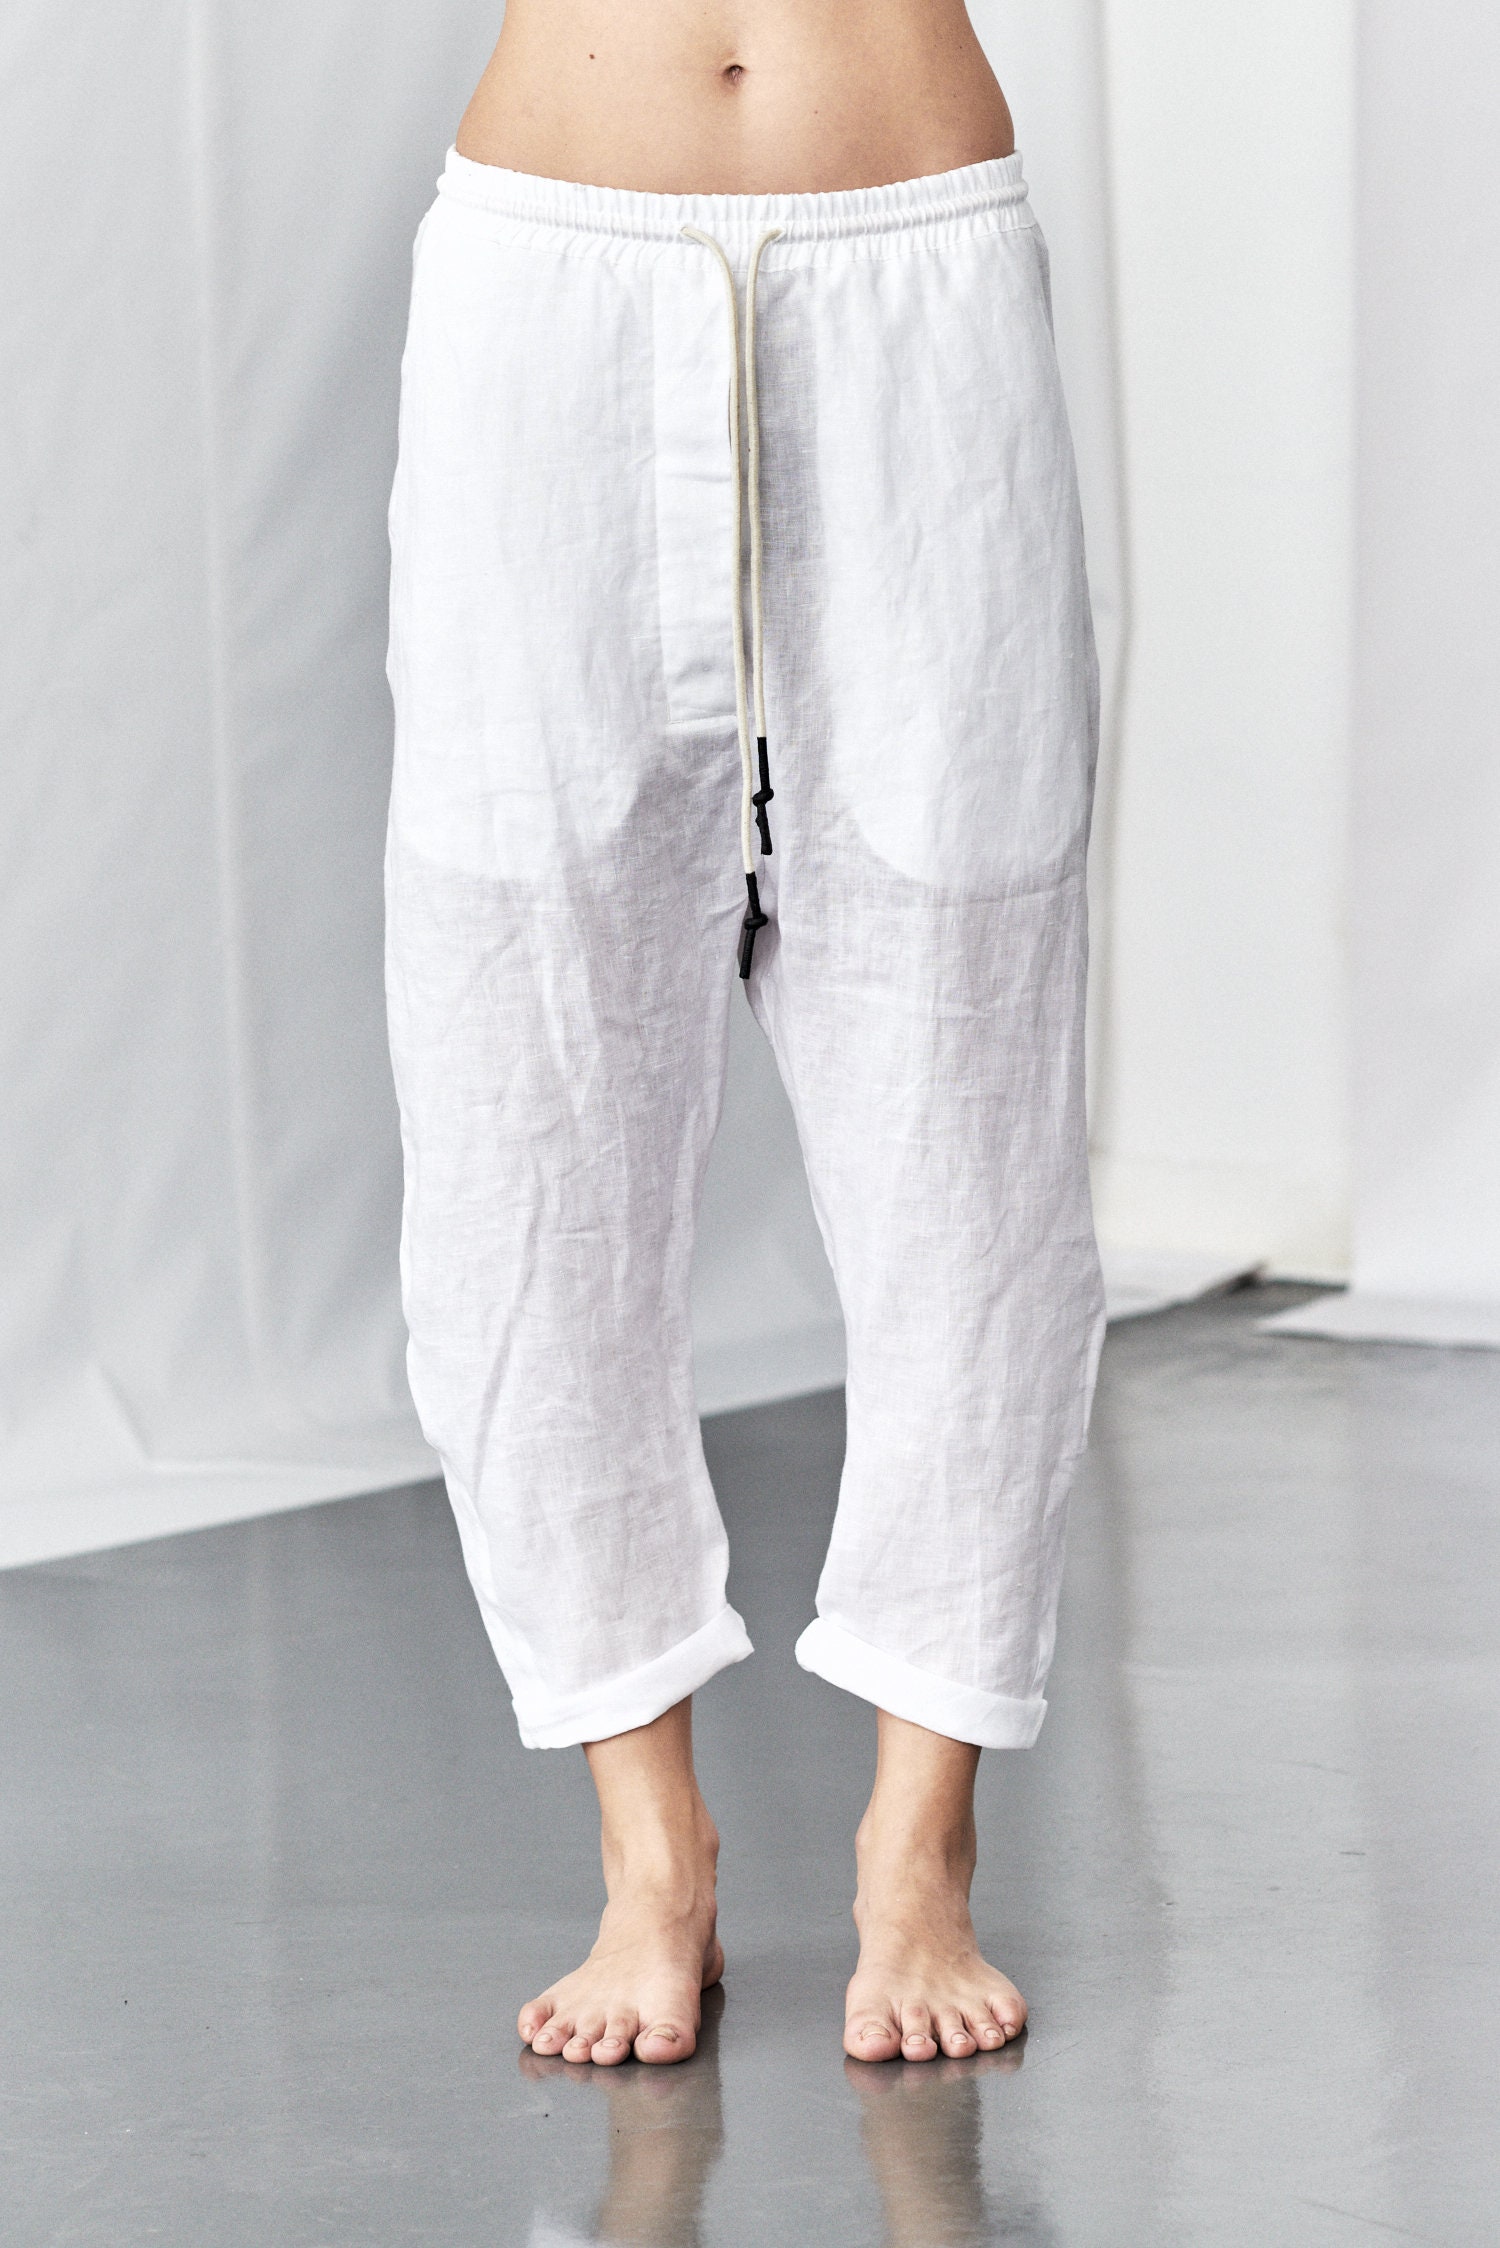 White Linen Pants / Modern Pants / Handmade Pants / Stylish | Etsy